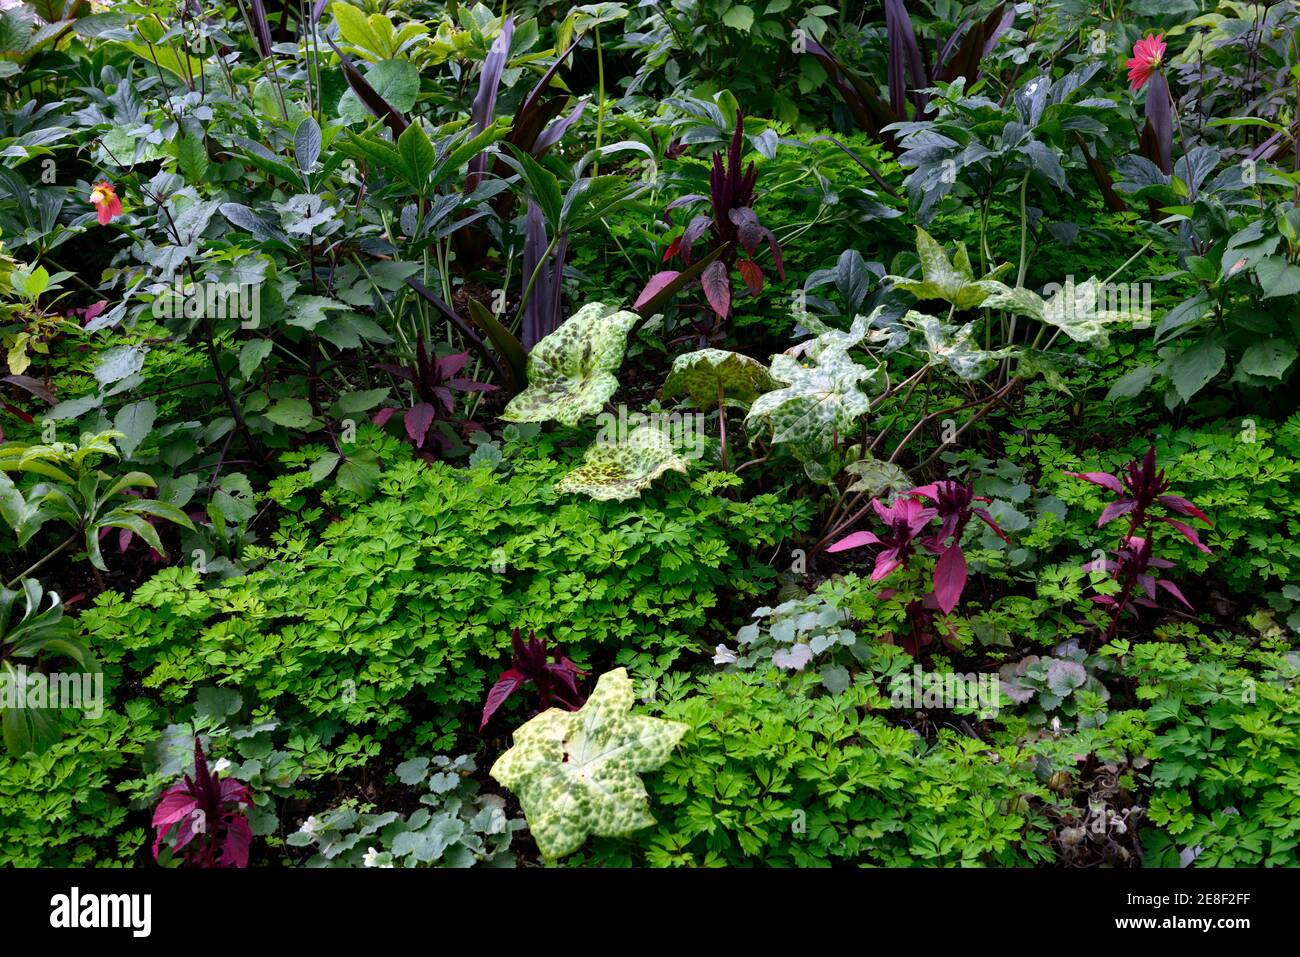 Podophyllum spotty dotty,brunnera,amaranthus,hellebores,corydalis,eucomis,leaves,foliage,mixed planting scheme,groundcover,layers,layered gardening,pe Stock Photo